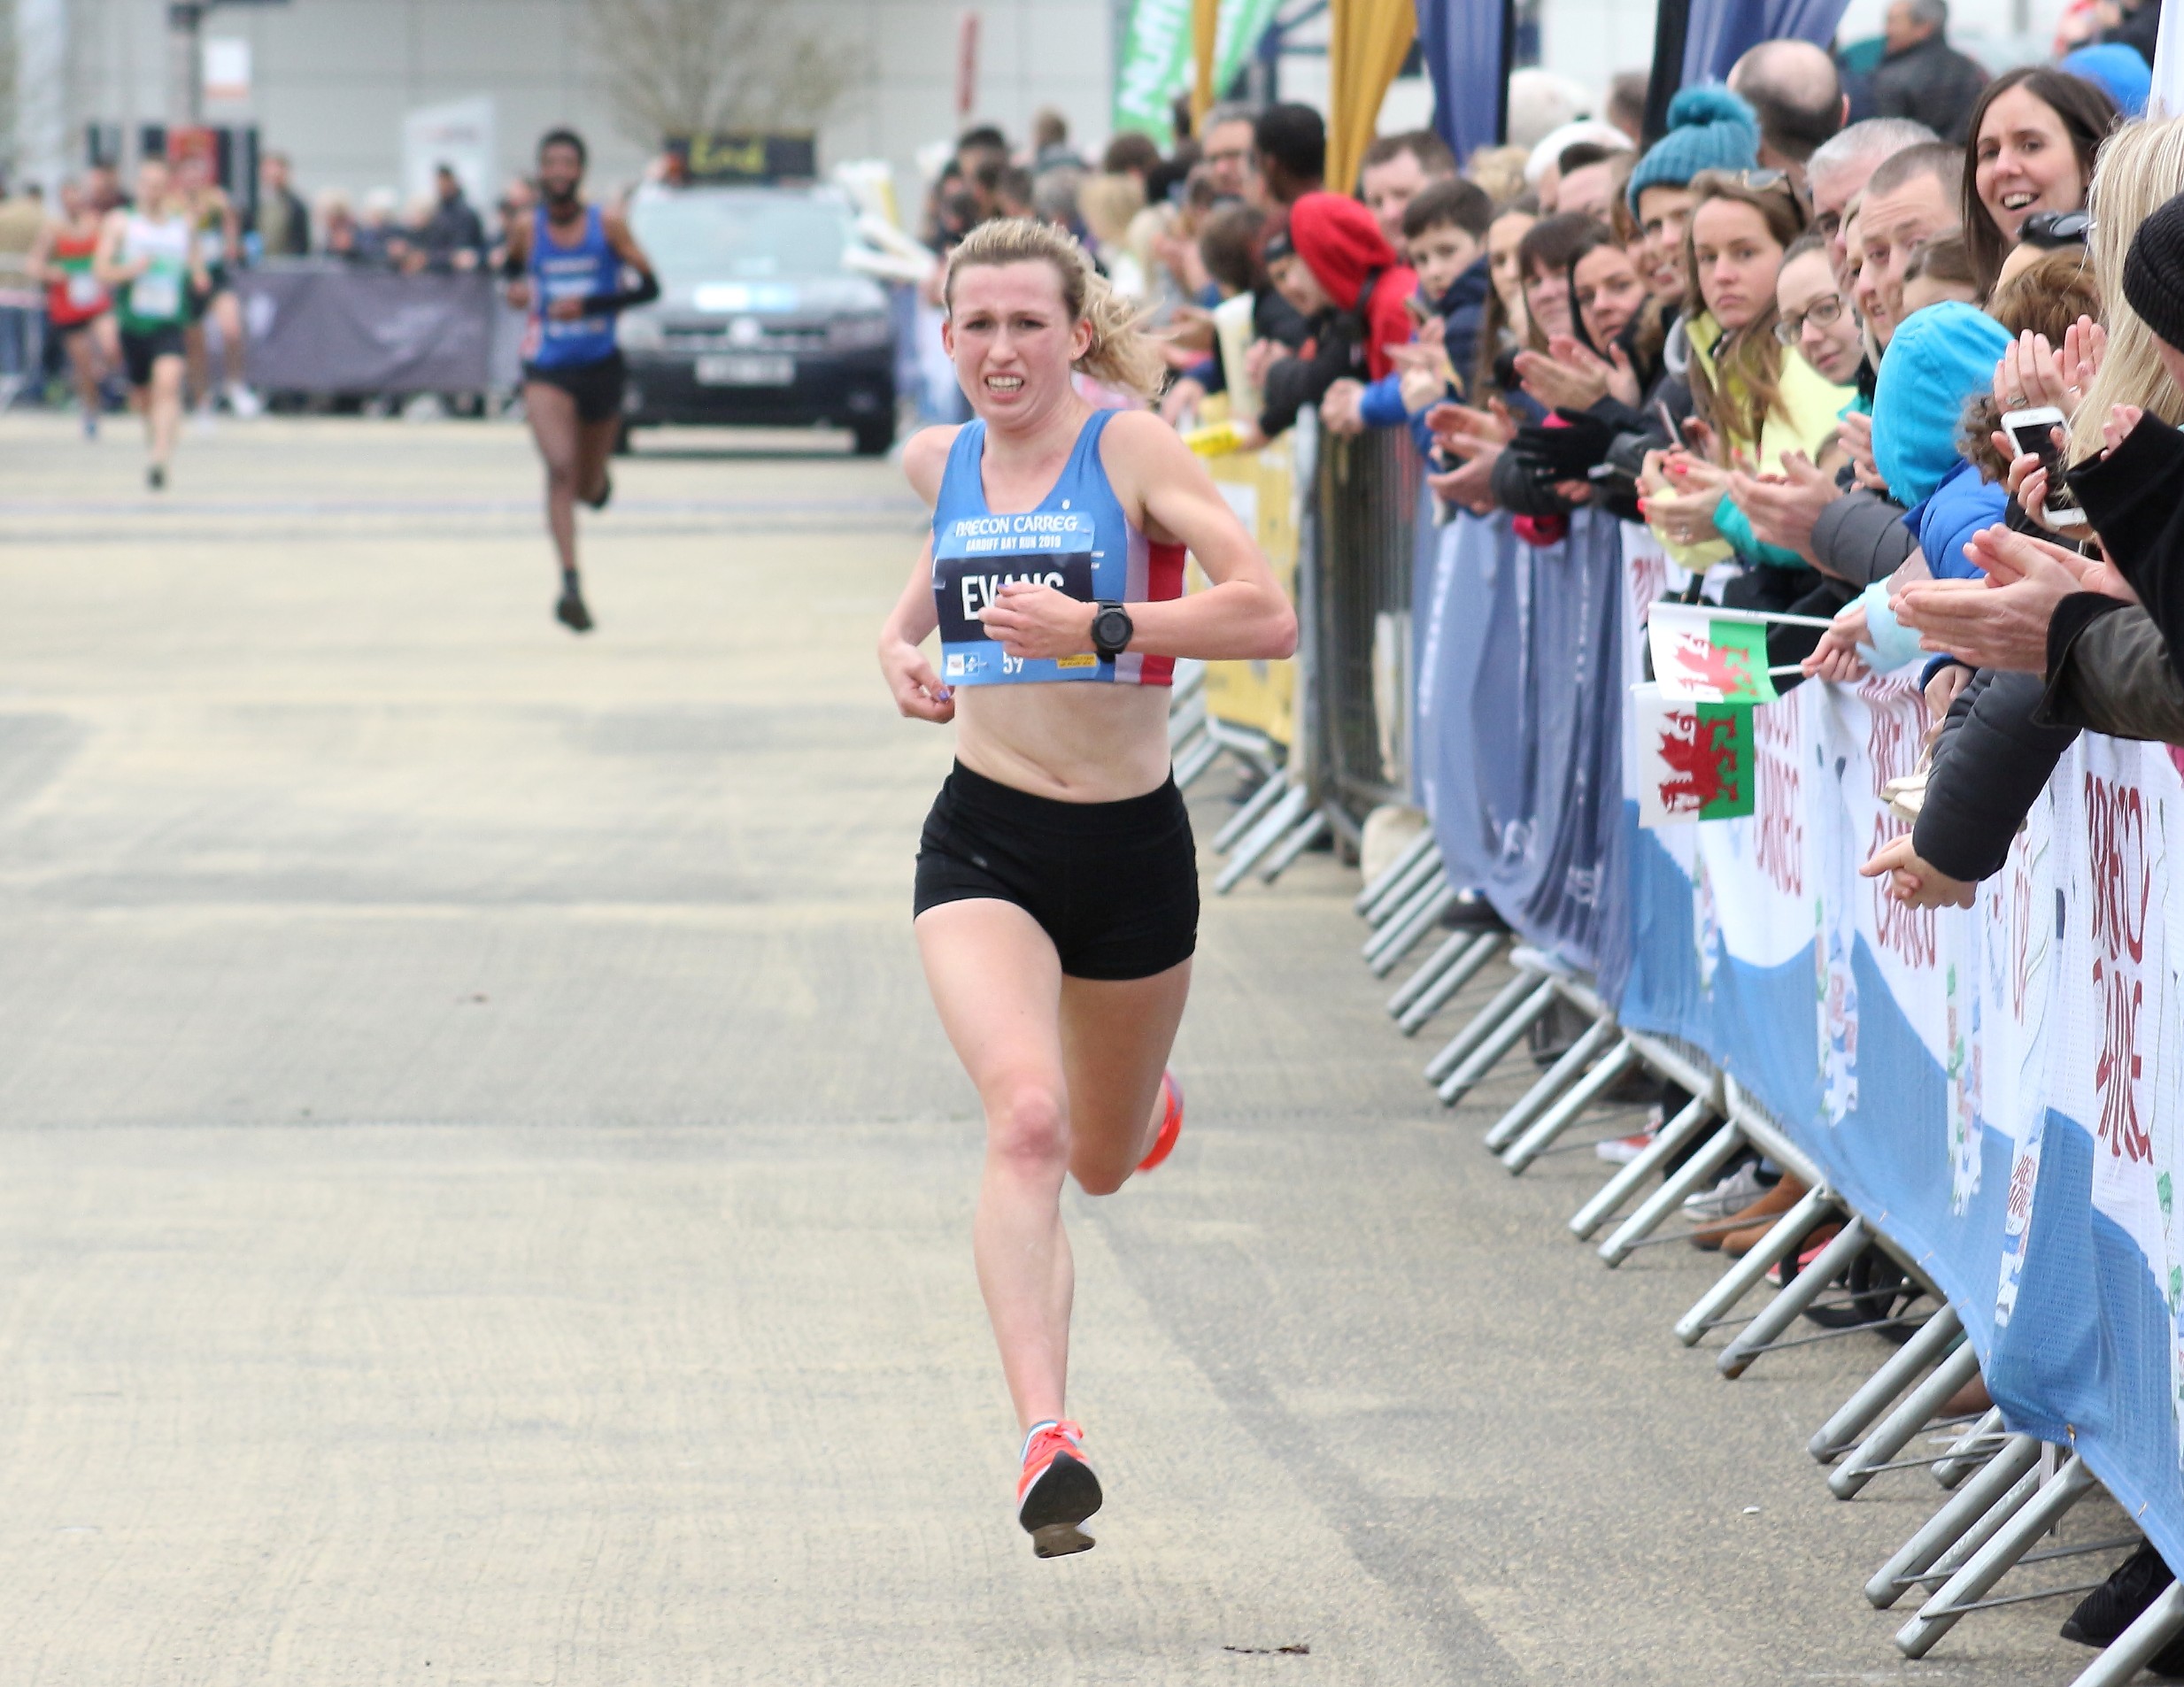 SPORT | Hereford marathon runner Clara Evans named as part of Wales’ Commonwealth Games team